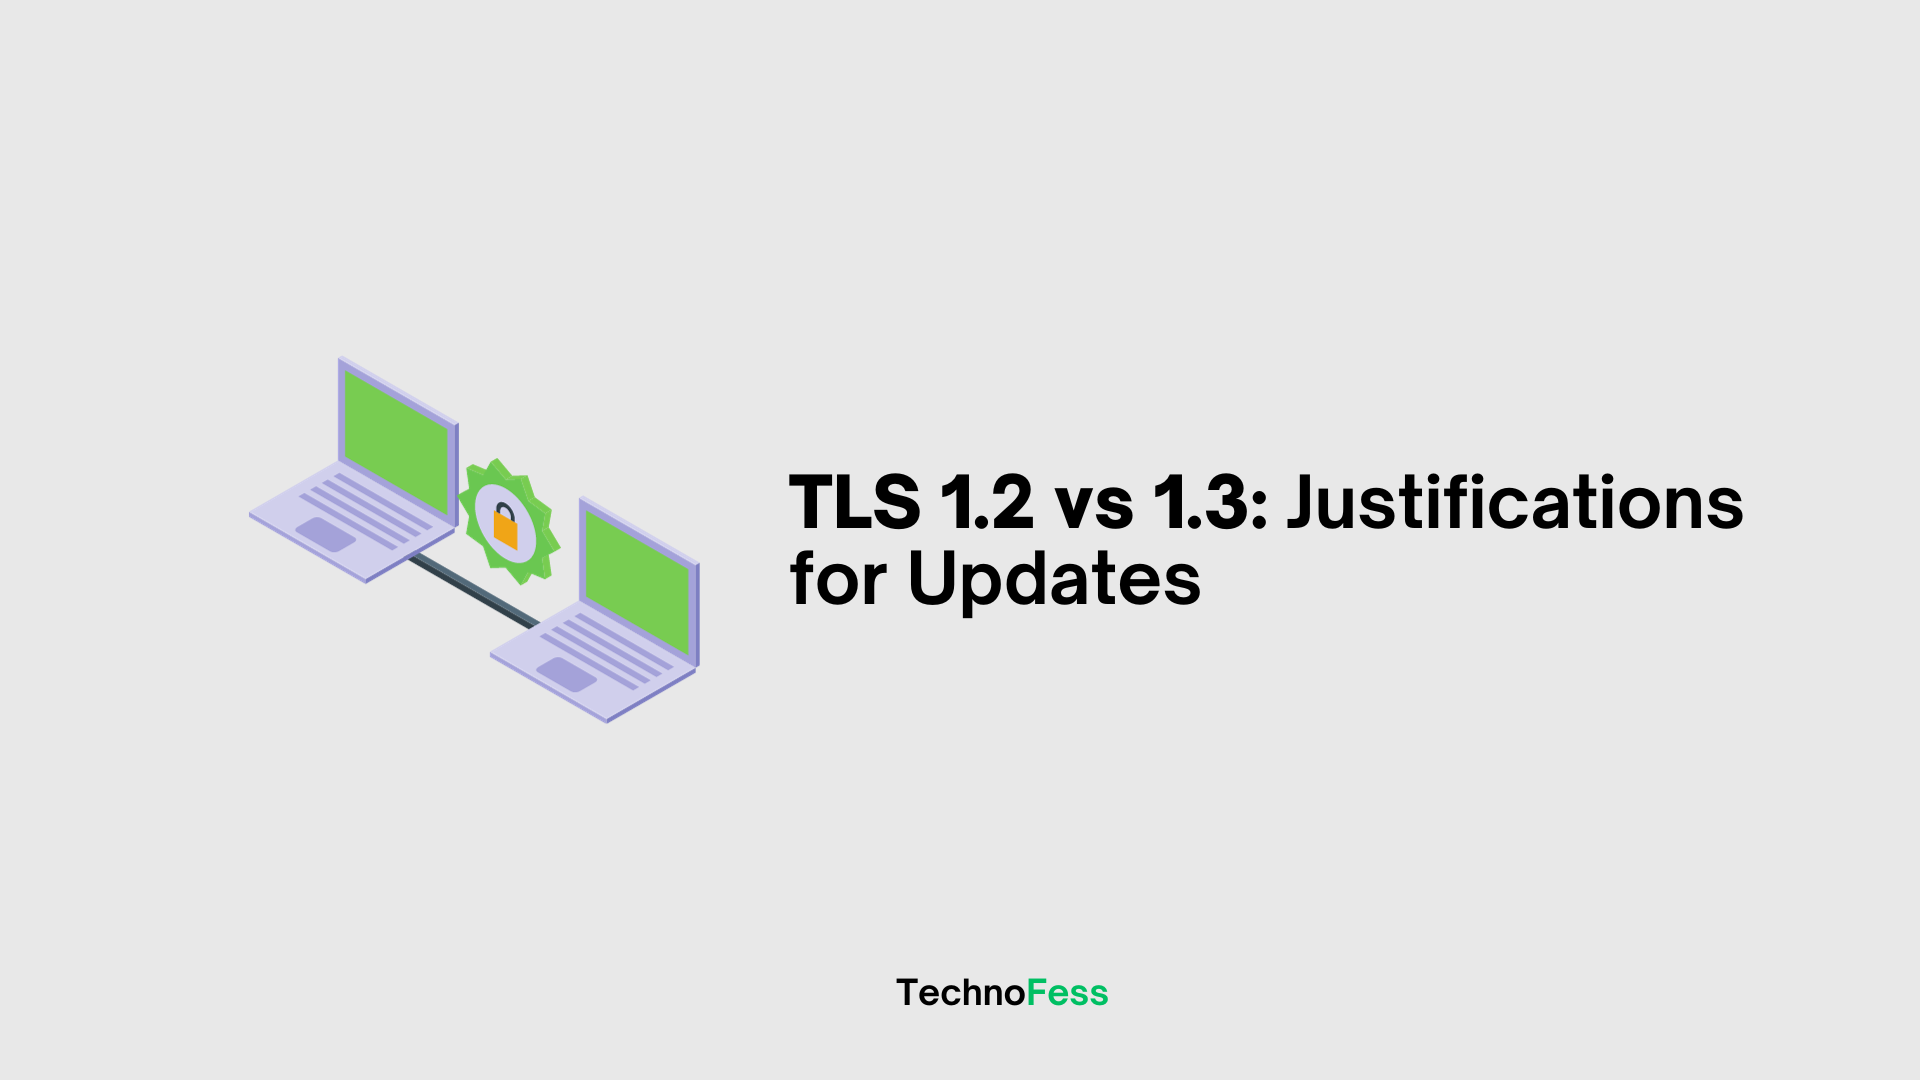 TLS 1.2 vs 1.3: Justifications for Updates